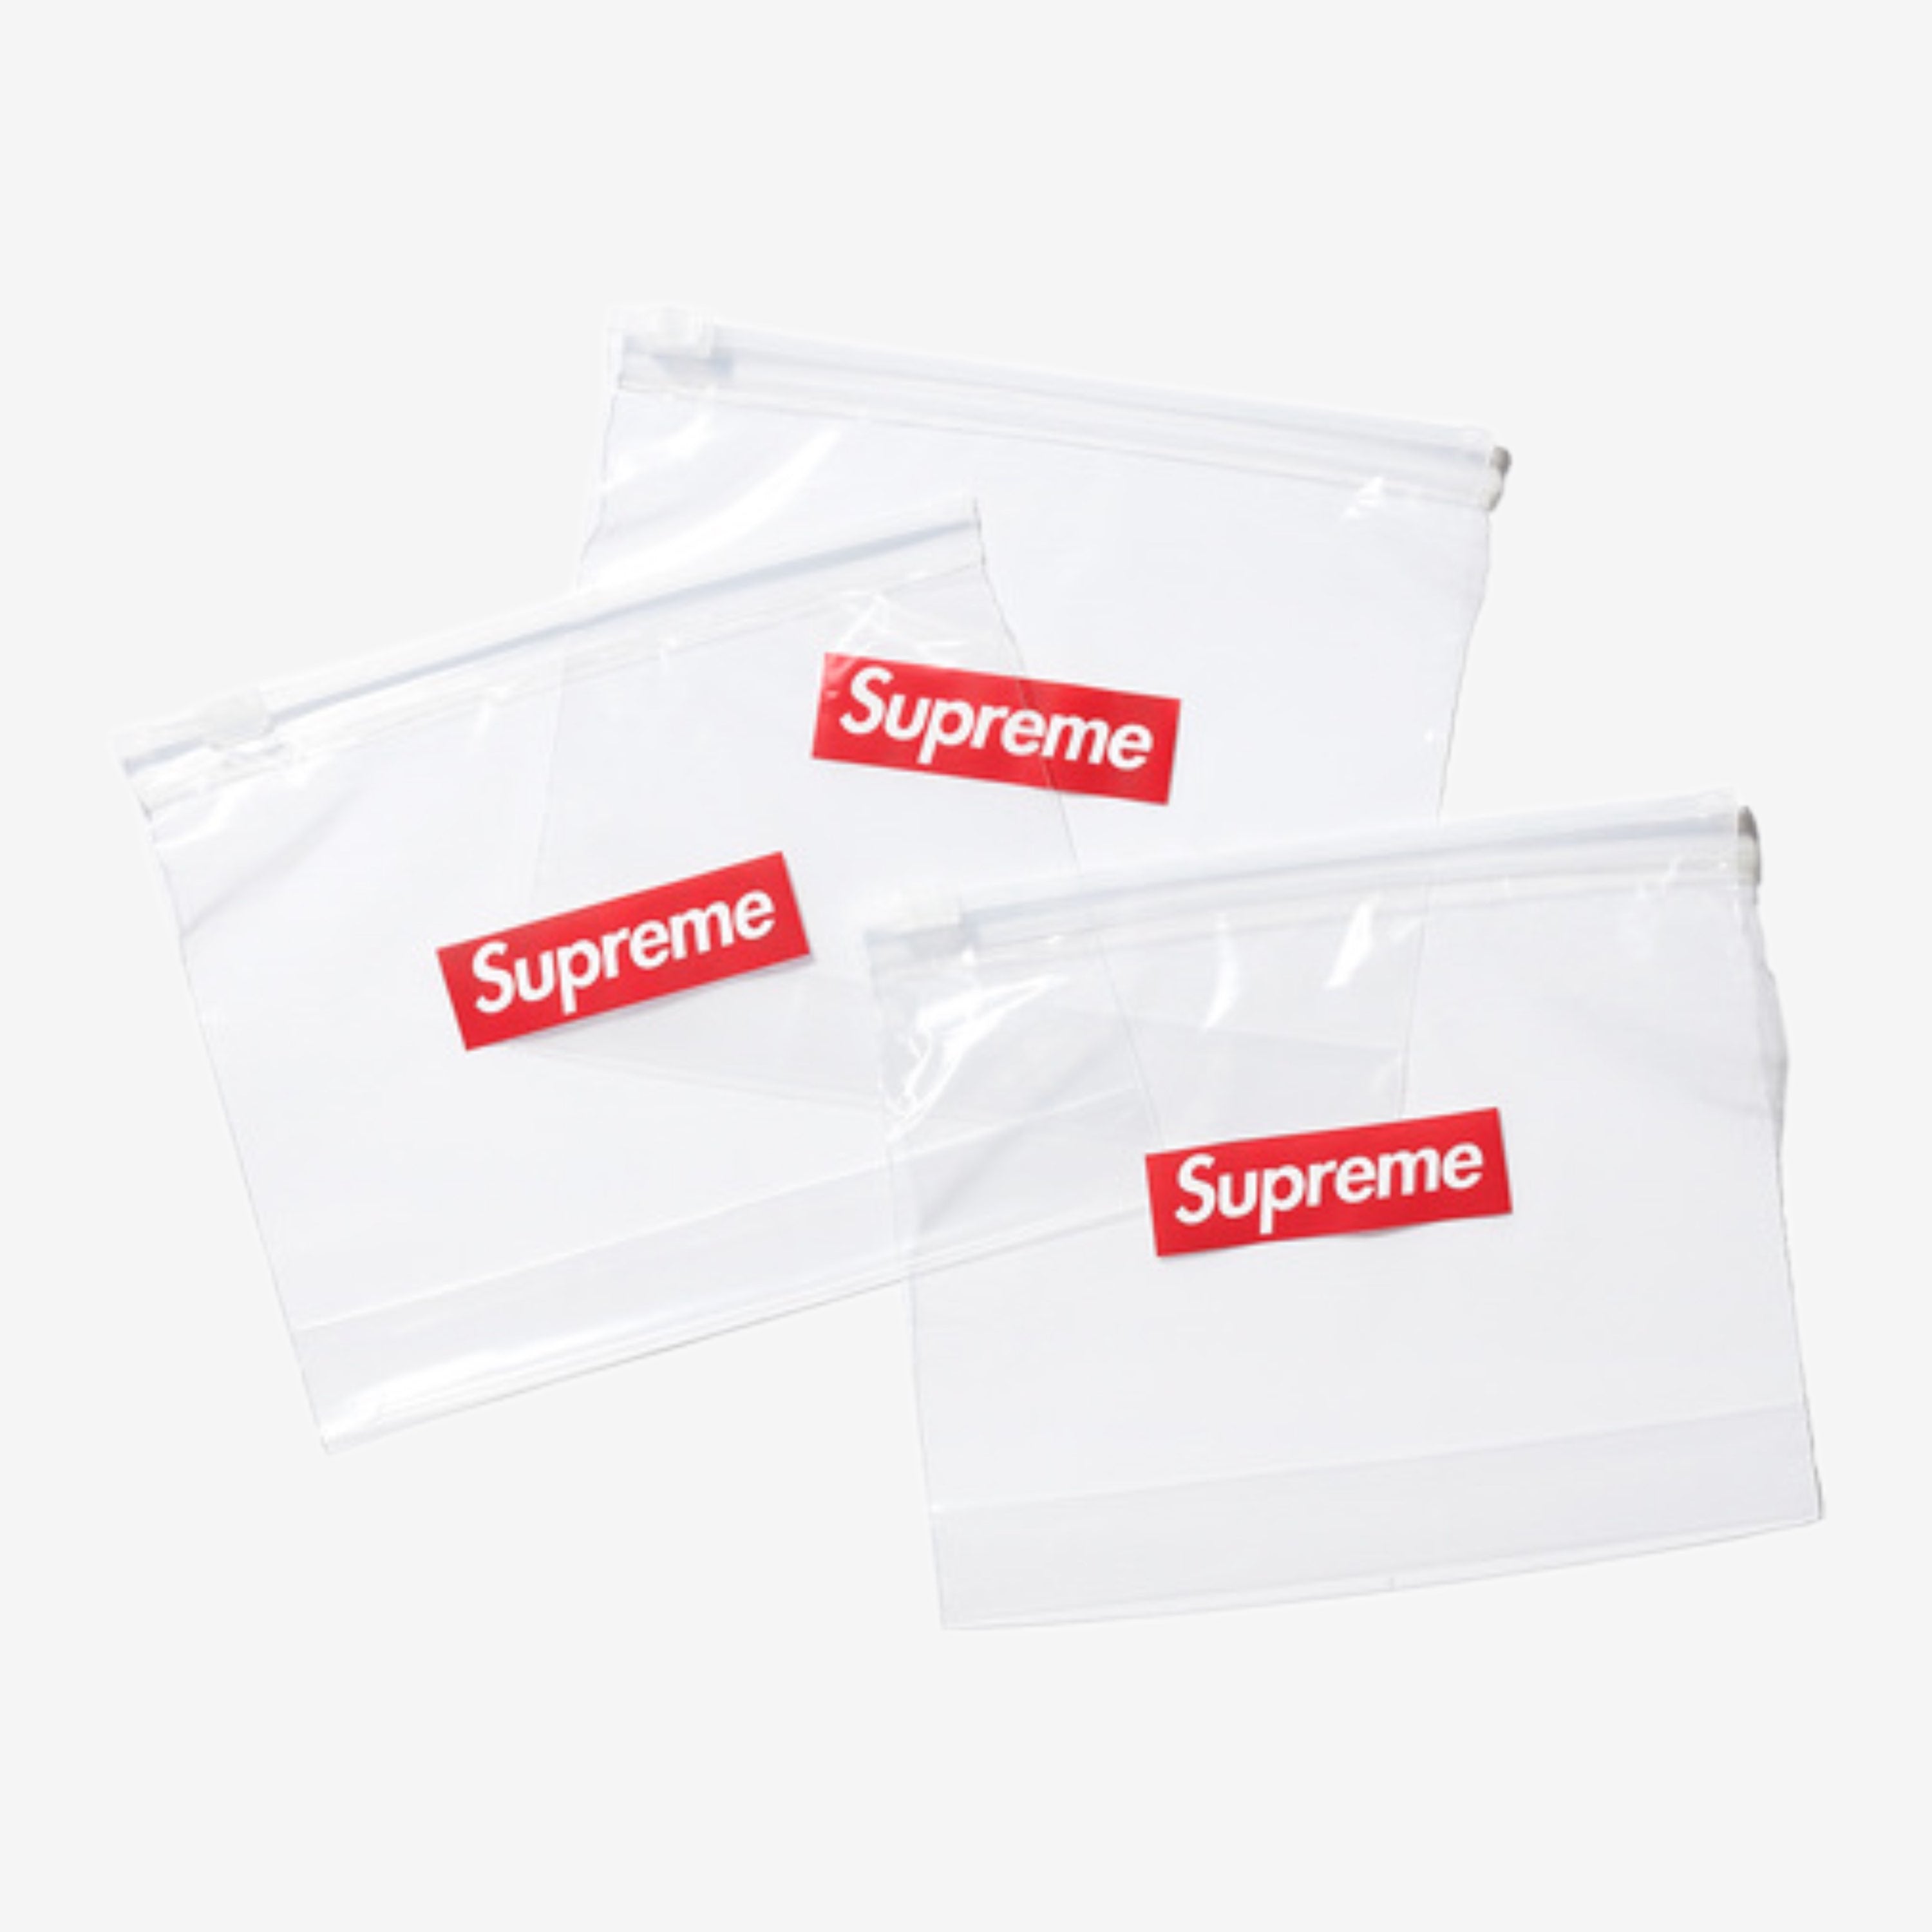 Supreme x Ziploc Bags